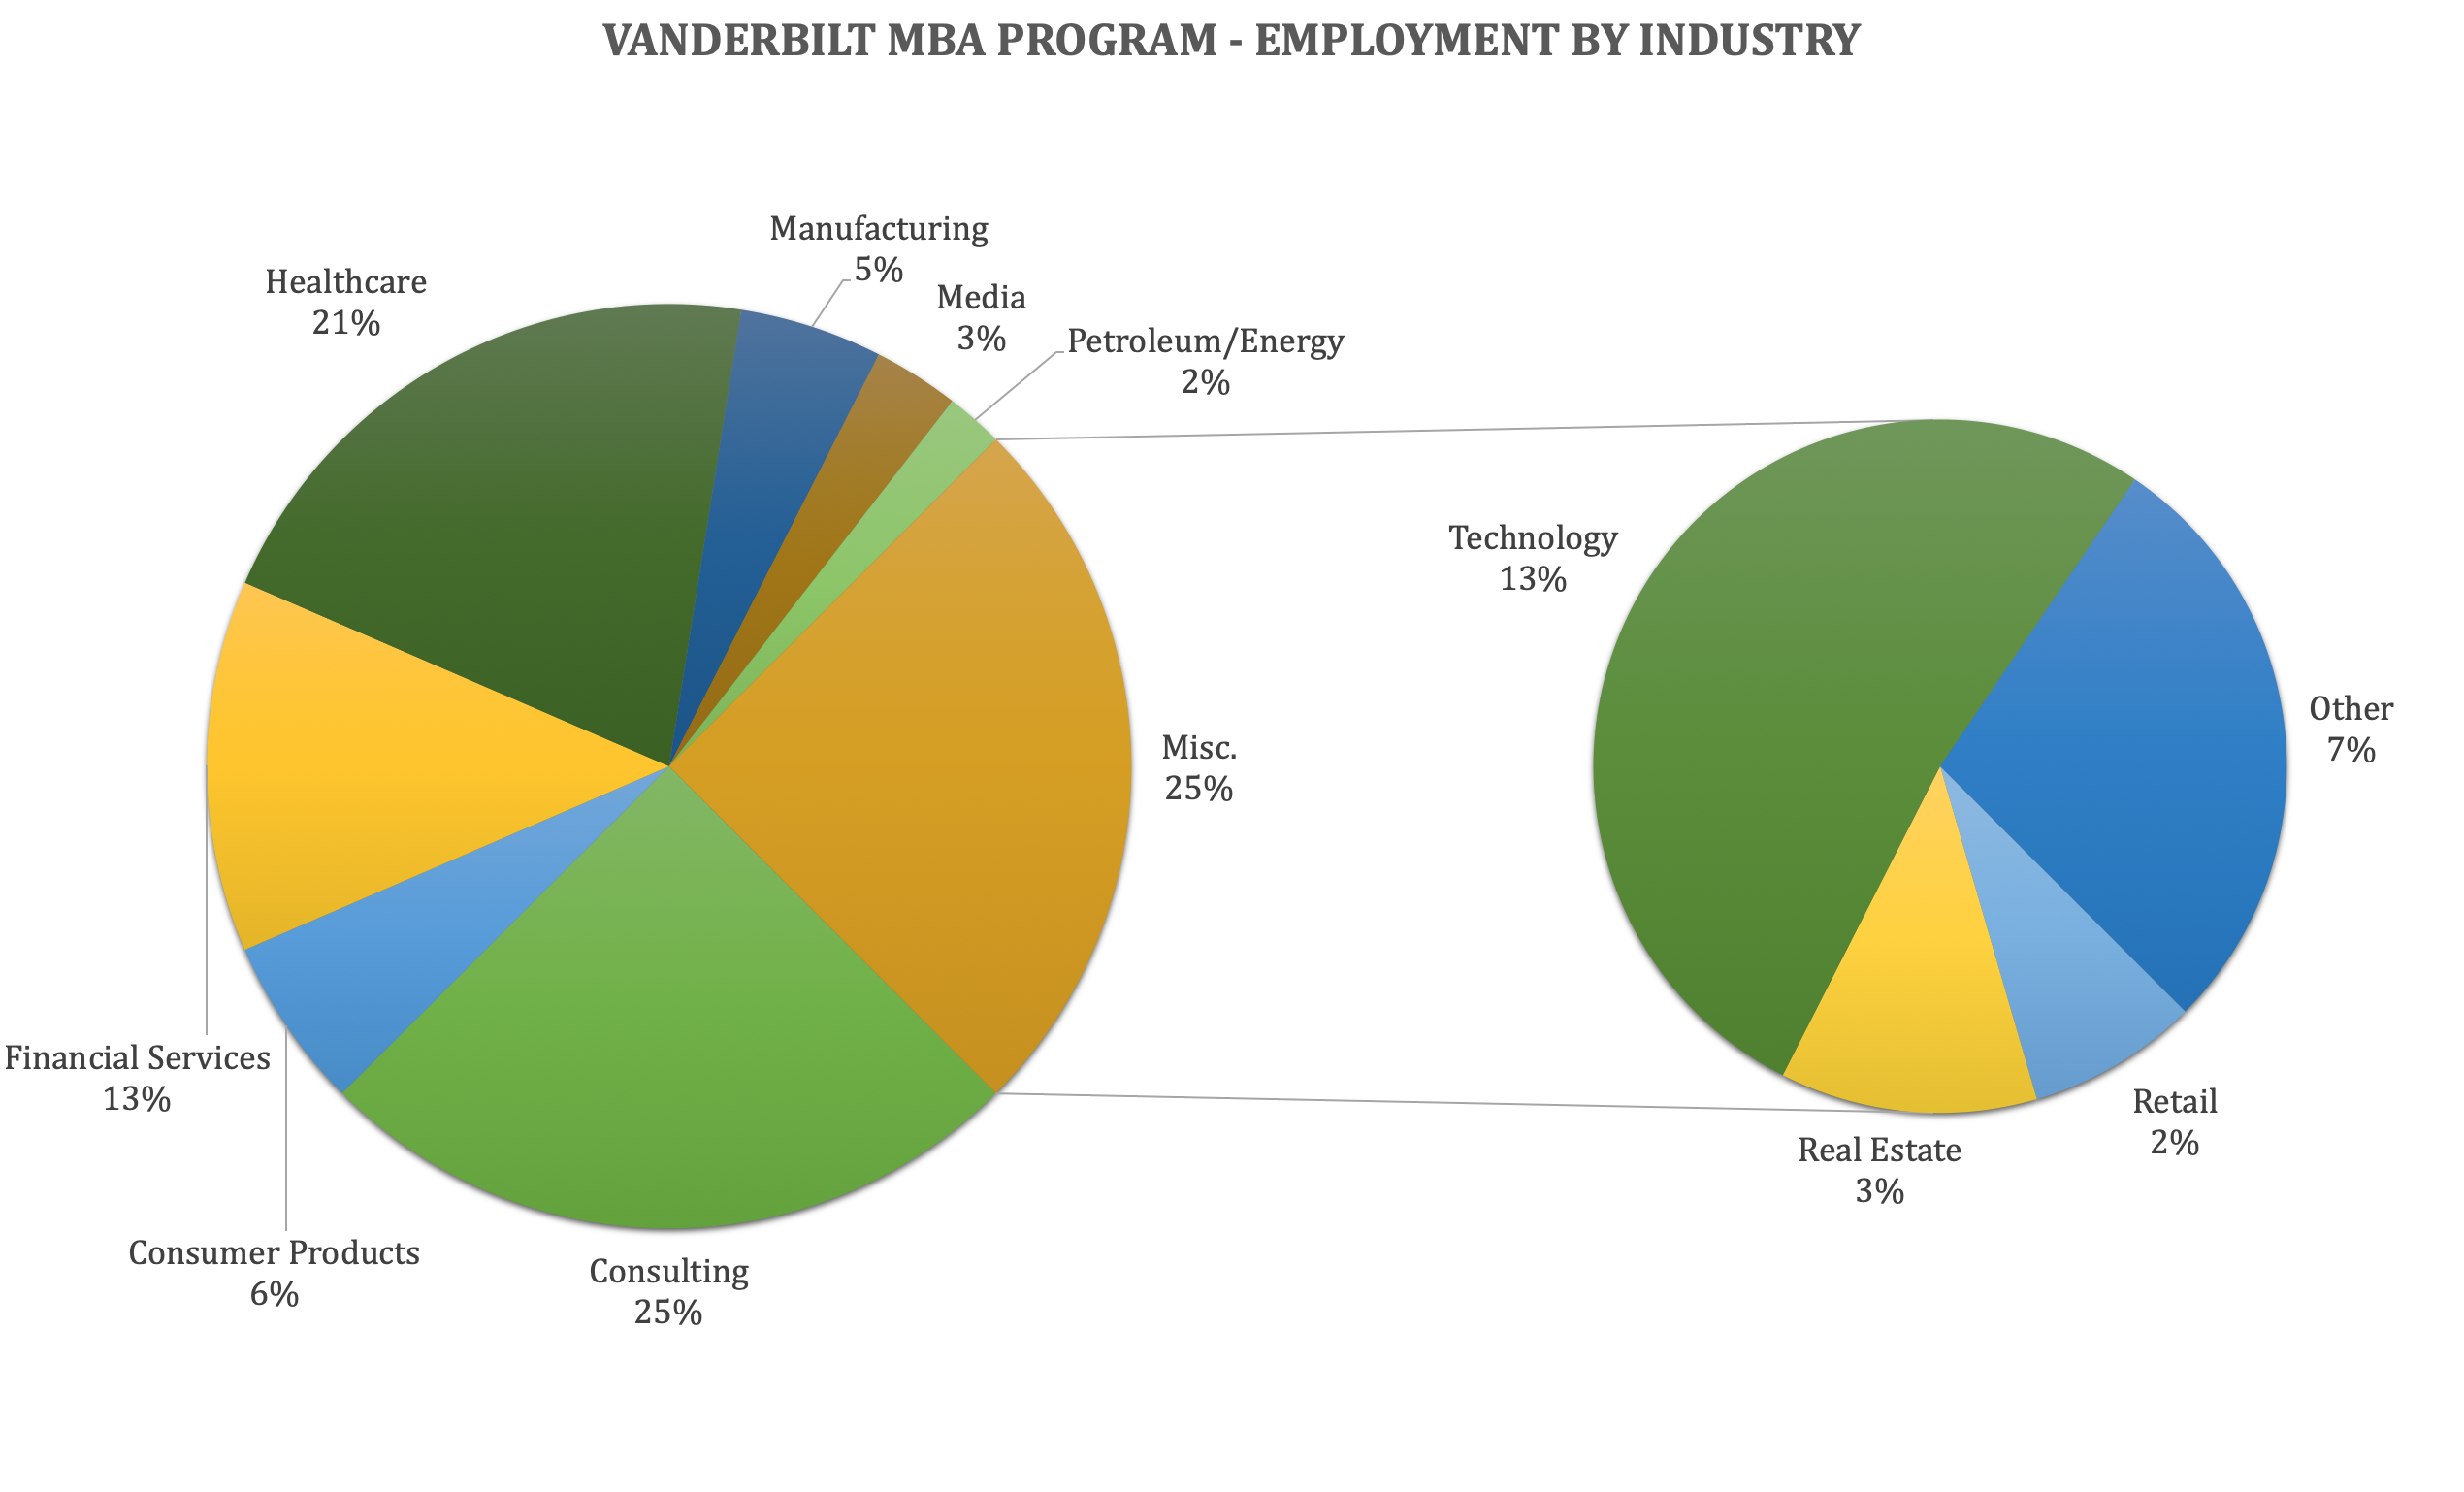 Vanderbilt MBA Program - Vanderbilt Owen Graduate School of Management - Employment by Industry